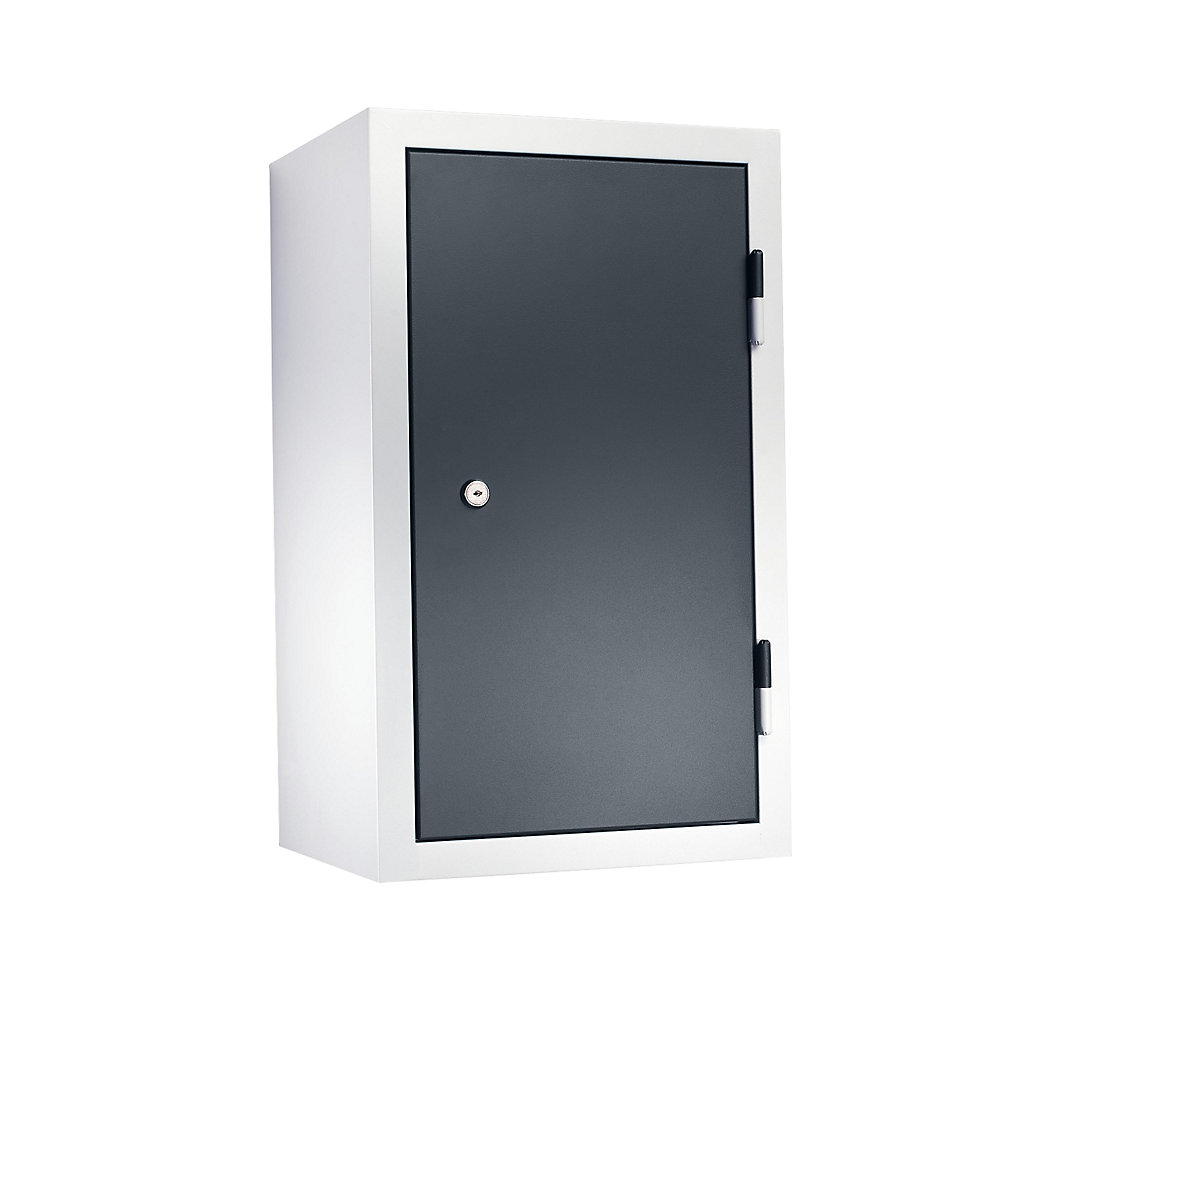 Wall mounted cupboard for the workshop – eurokraft basic, HxWxD 600 x 350 x 320 mm, solid panel doors, basalt grey RAL 7012-7